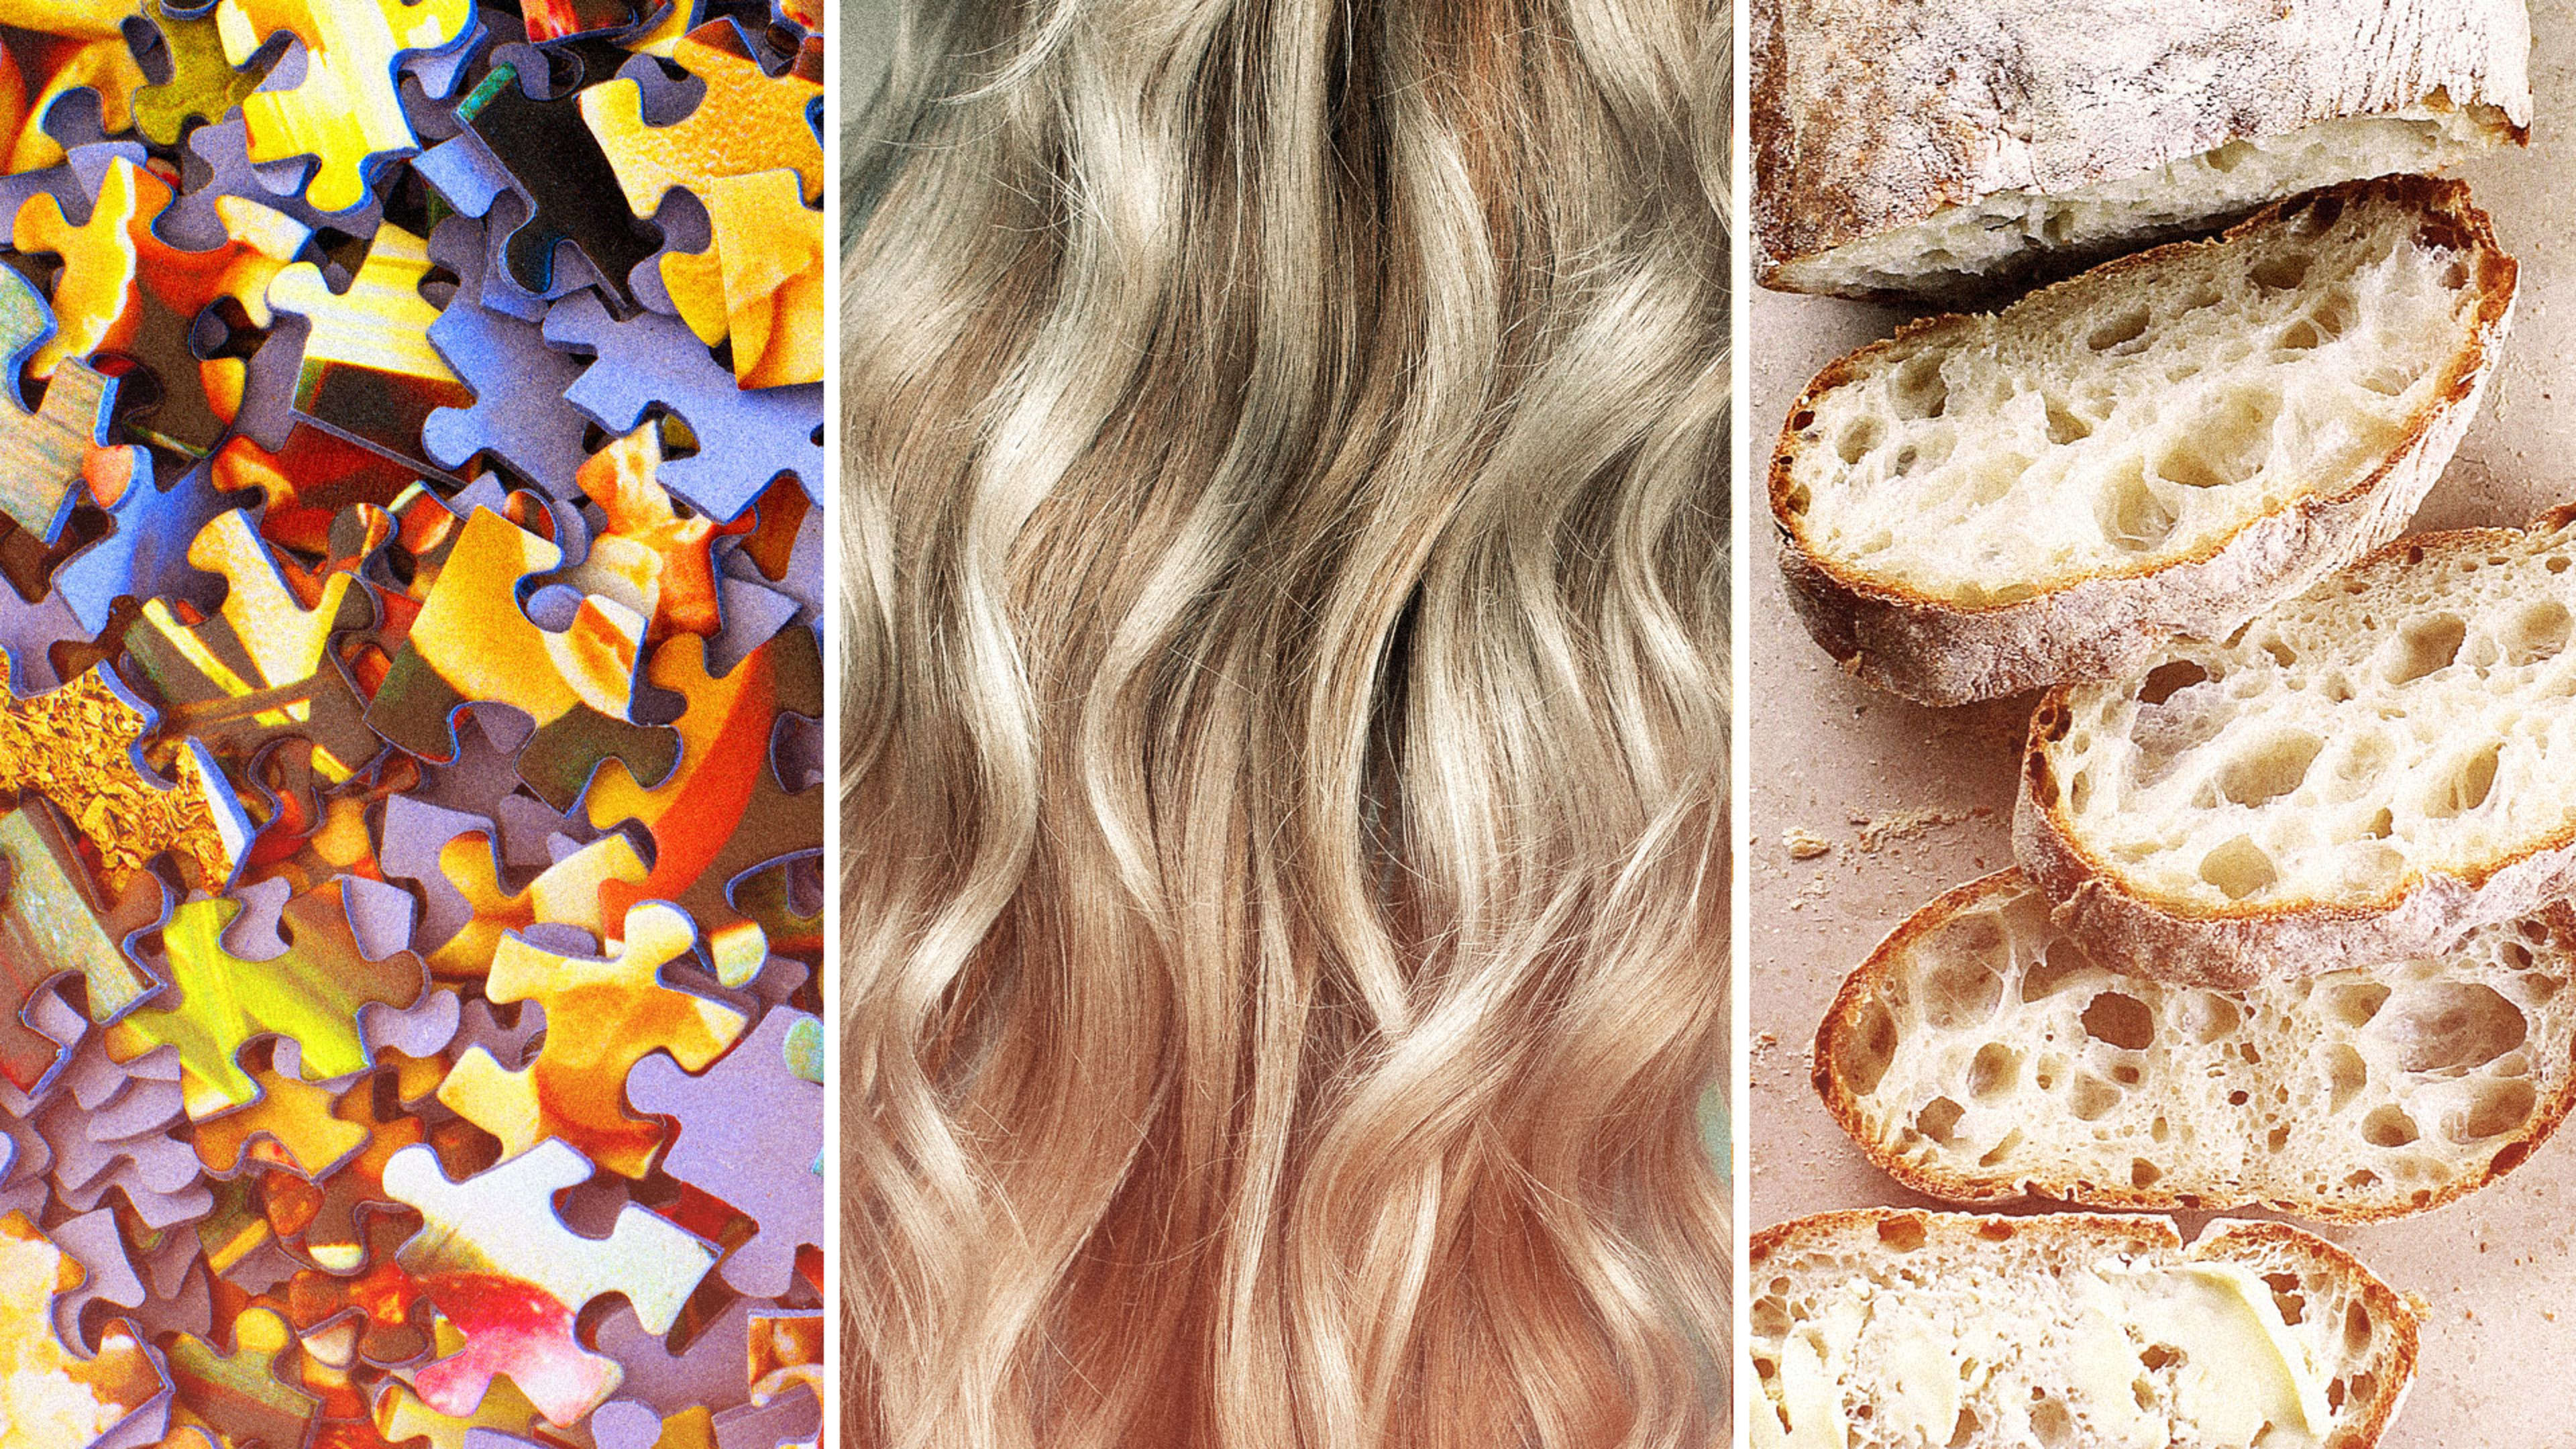 Puzzles, hair dye, bread: These companies are thriving despite coronavirus